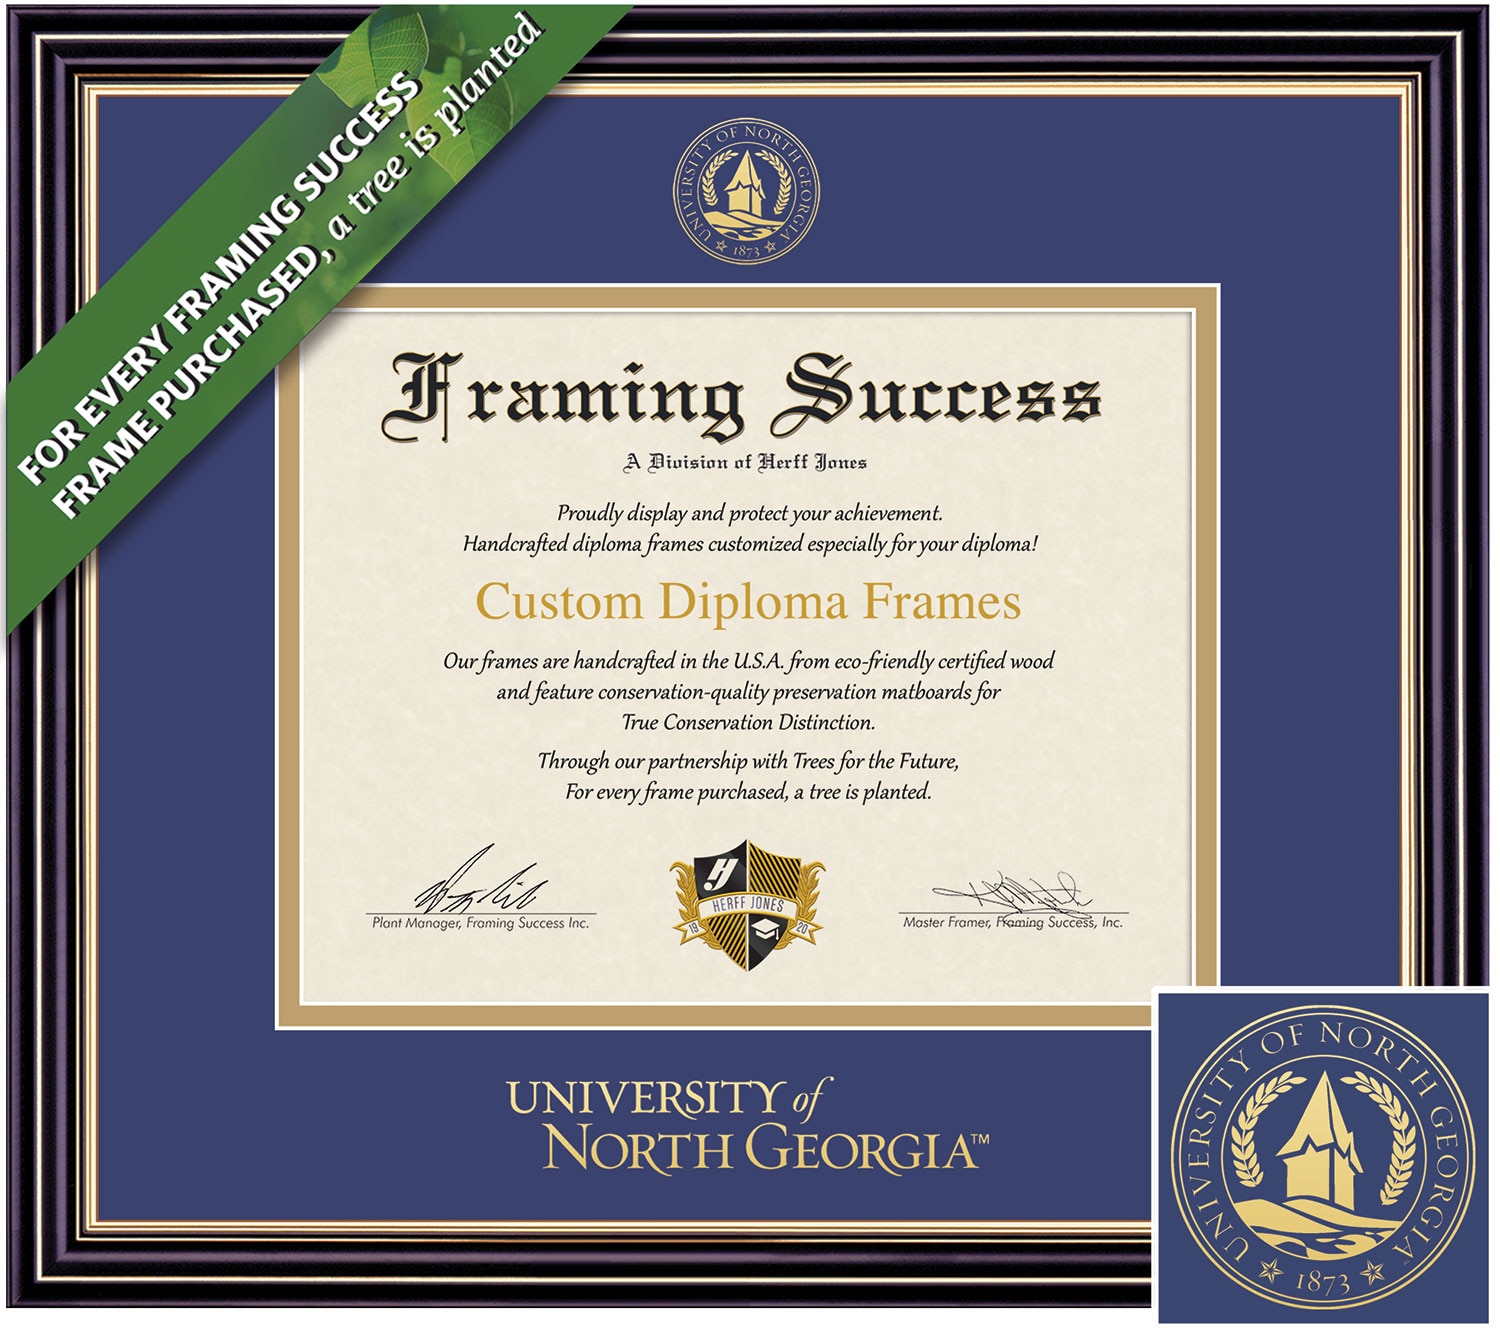 Framing Success 11 x 14 Prestige Gold Embossed School Seal Bachelors, Masters, PhD Diploma Frame